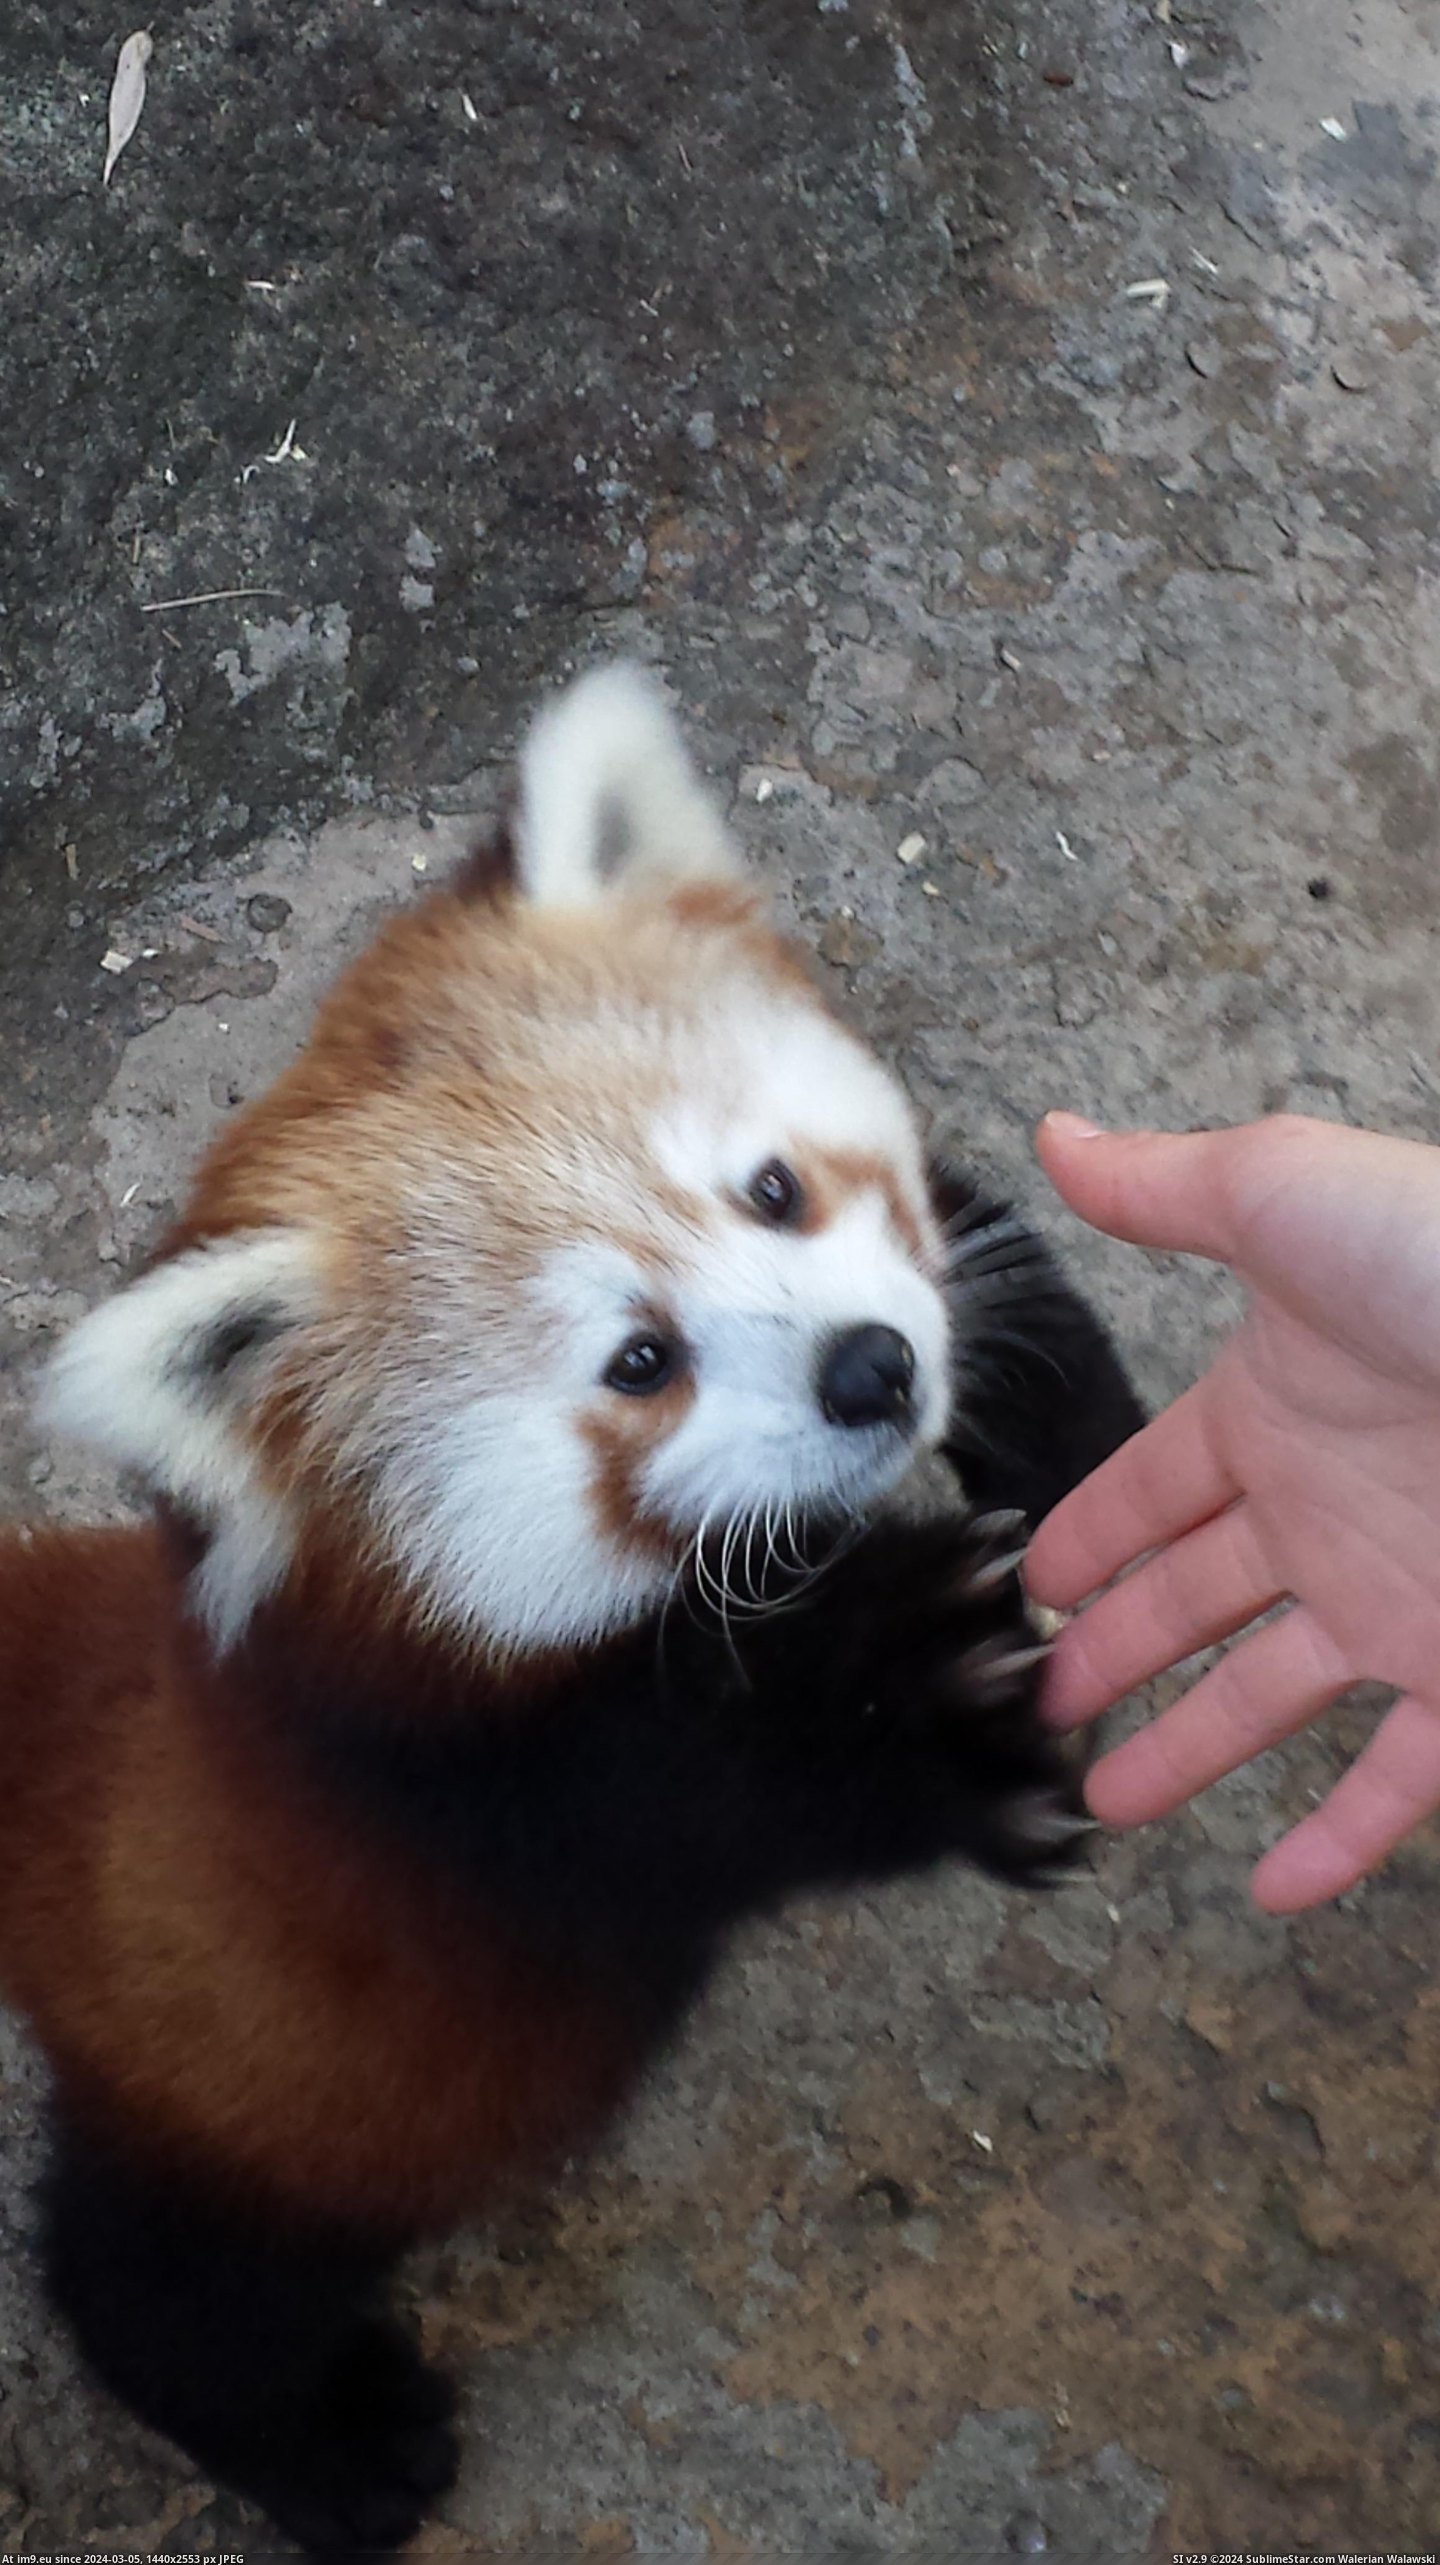 #Red #Girlfriend #Zoo #Shake #Panda #Got #Hands [Aww] My girlfriend got to shake hands with a red panda at the zoo! Pic. (Bild von album My r/AWW favs))